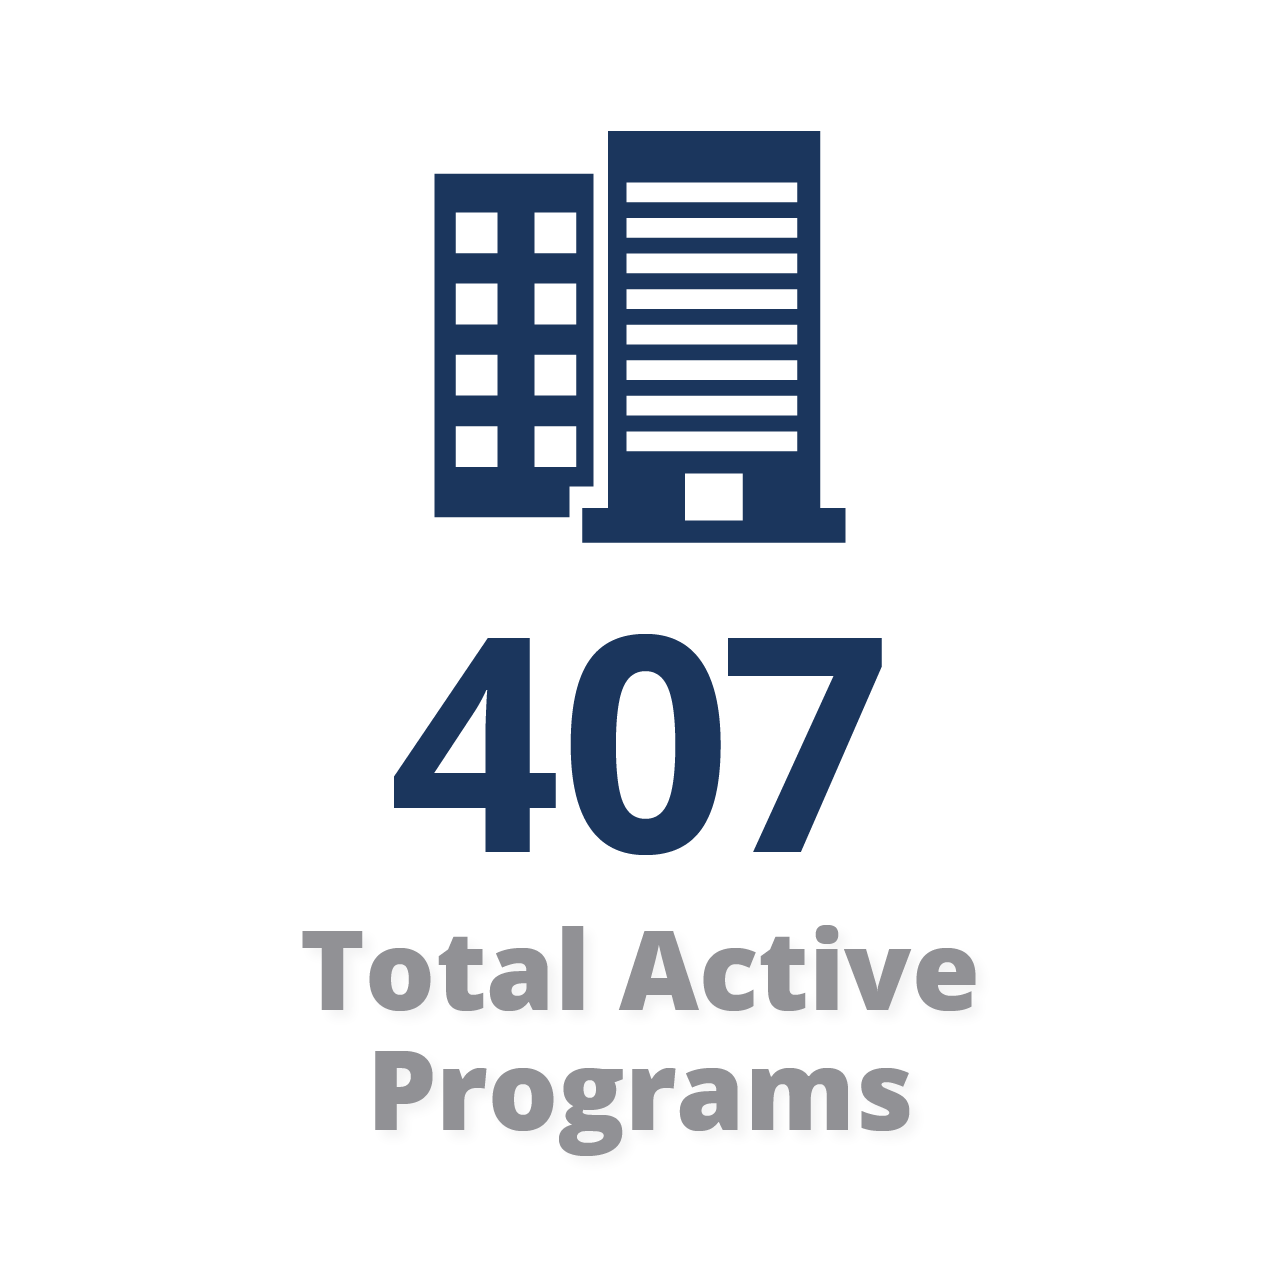 403 Total Active Programs